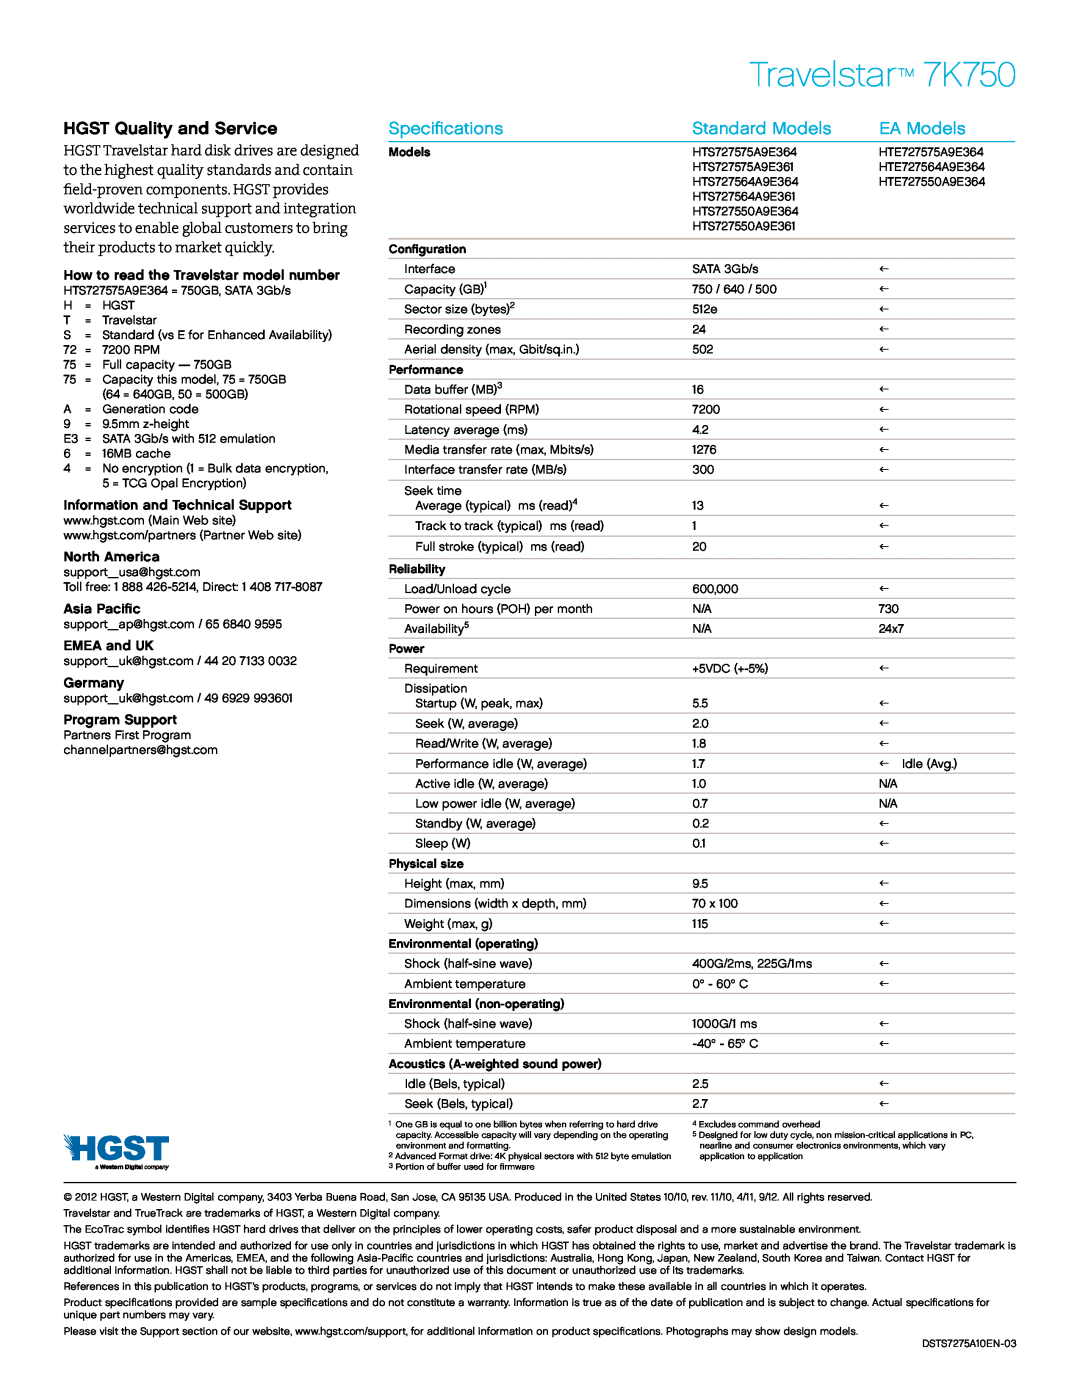 Hitachi HTE727575A9E364 manual HGST Quality and Service, Specifications, Standard Models, EA Models, Travelstar 7K750 